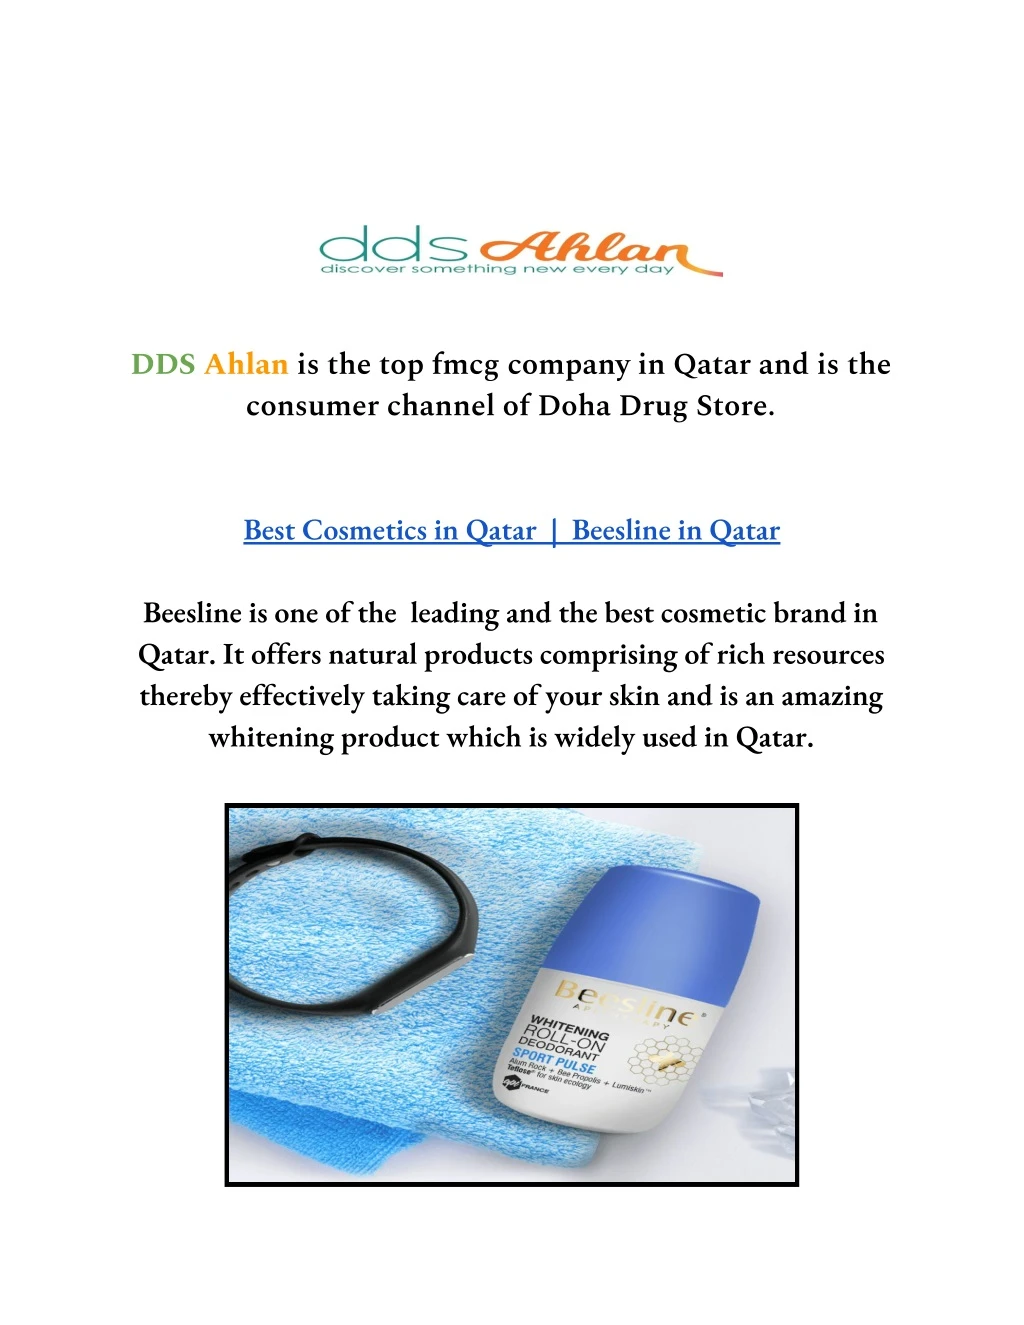 dds ahlan is the top fmcg company in qatar